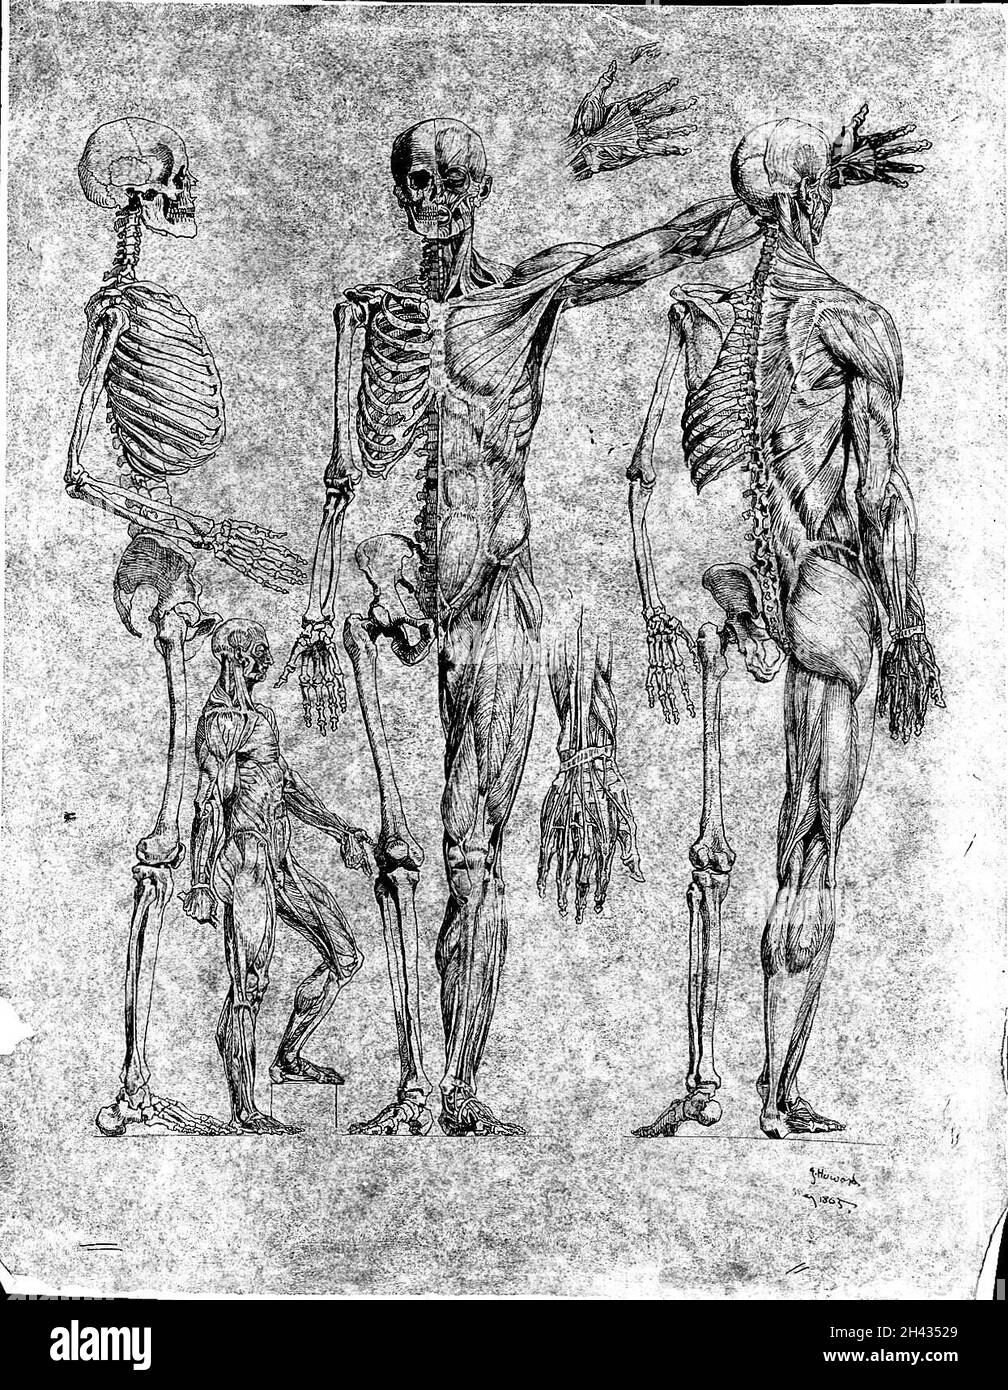 Skeletons. Pen and ink drawing by Howard, Earl of Carlisle, 1865